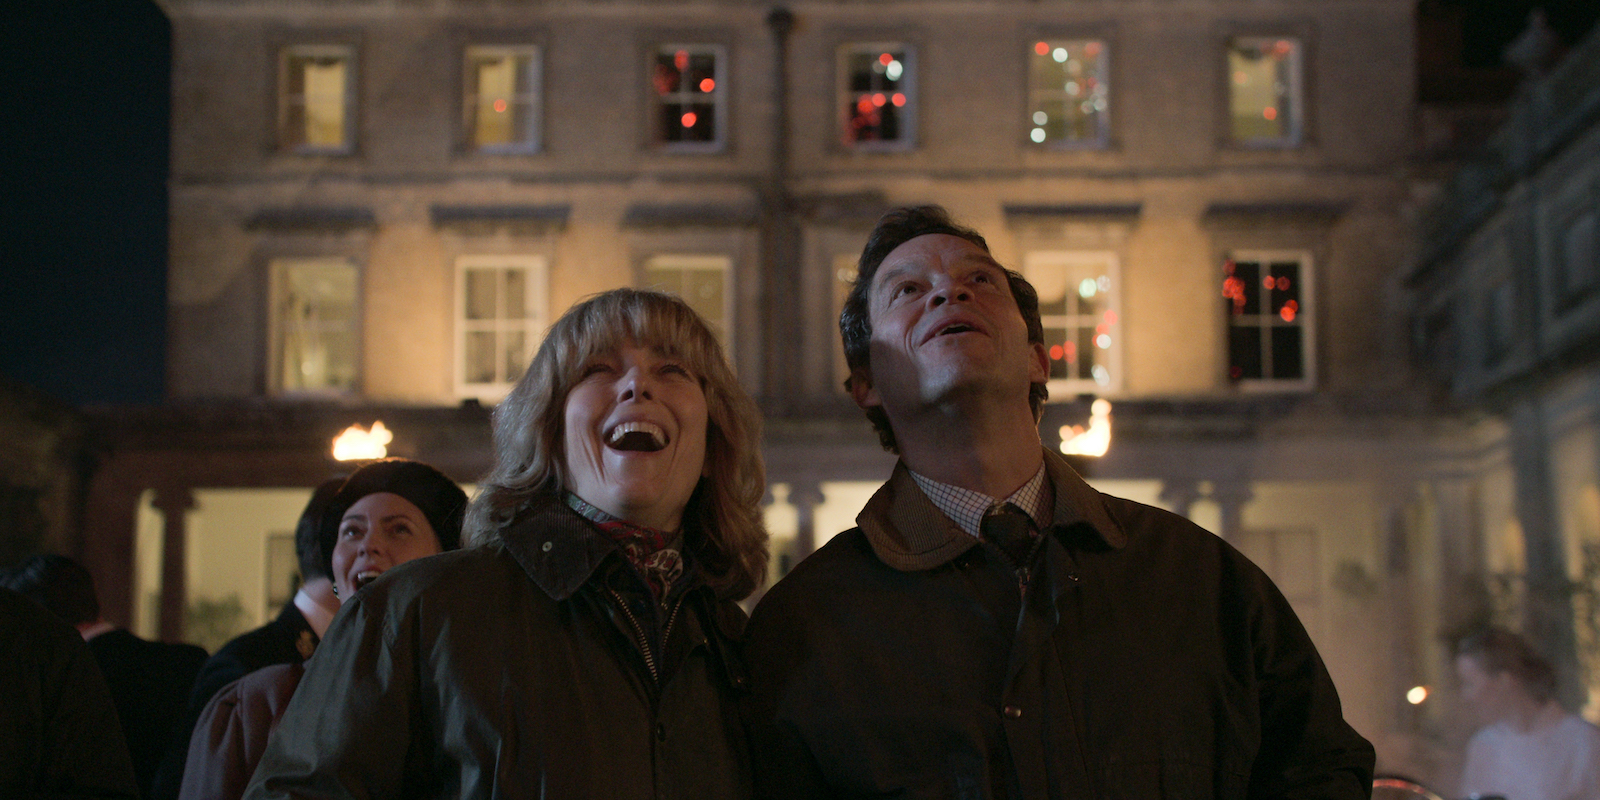 'The Crown' Season 5: Camilla Parker Bowles and Prince Charles look up at Christmas lights